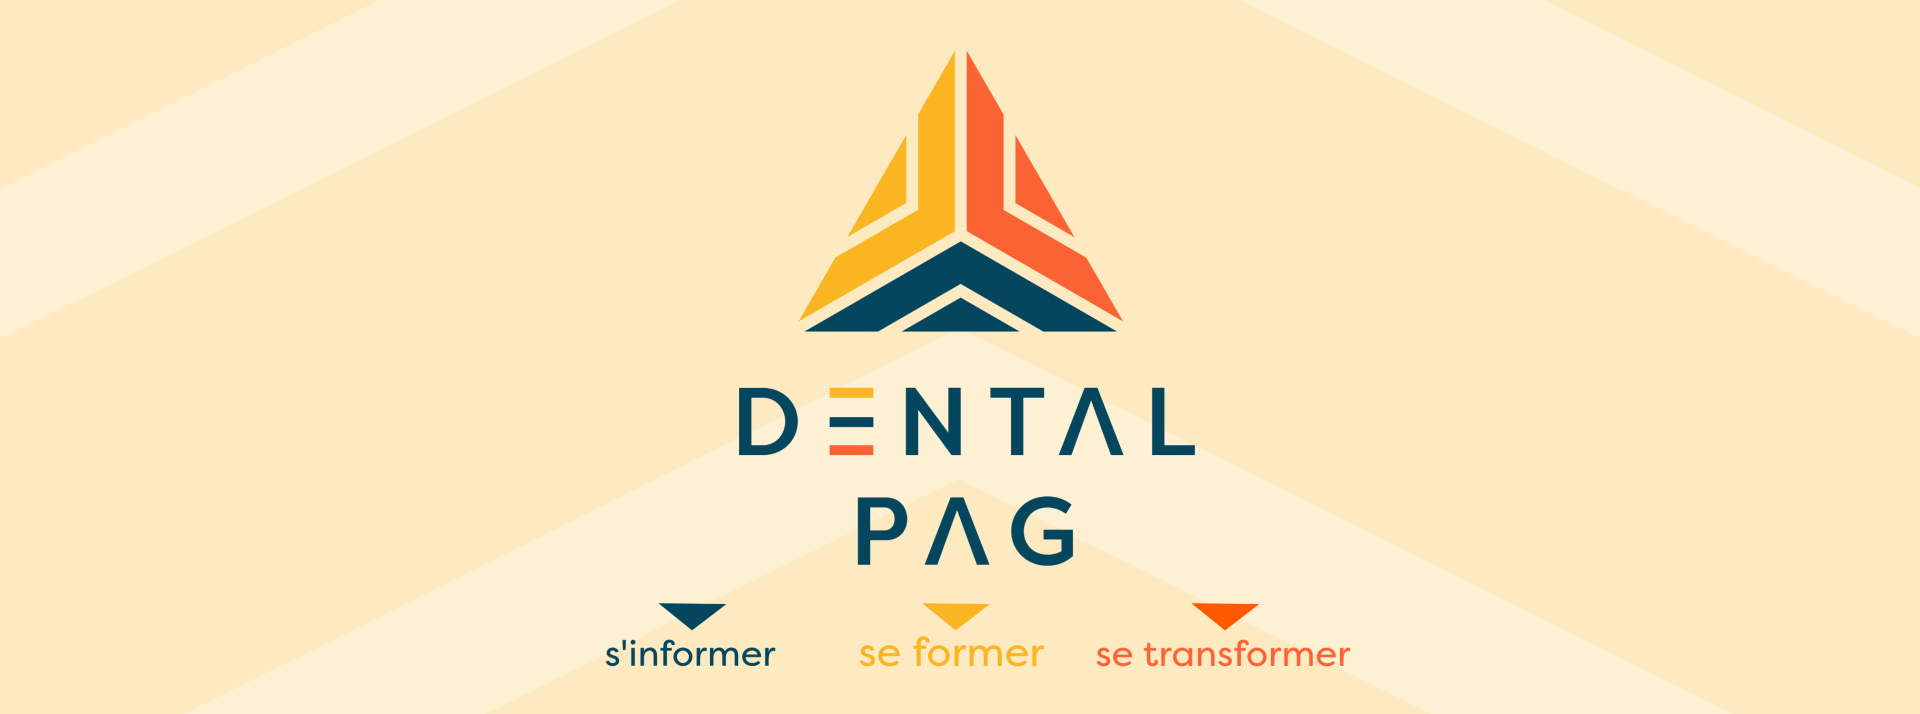 Dental PAG